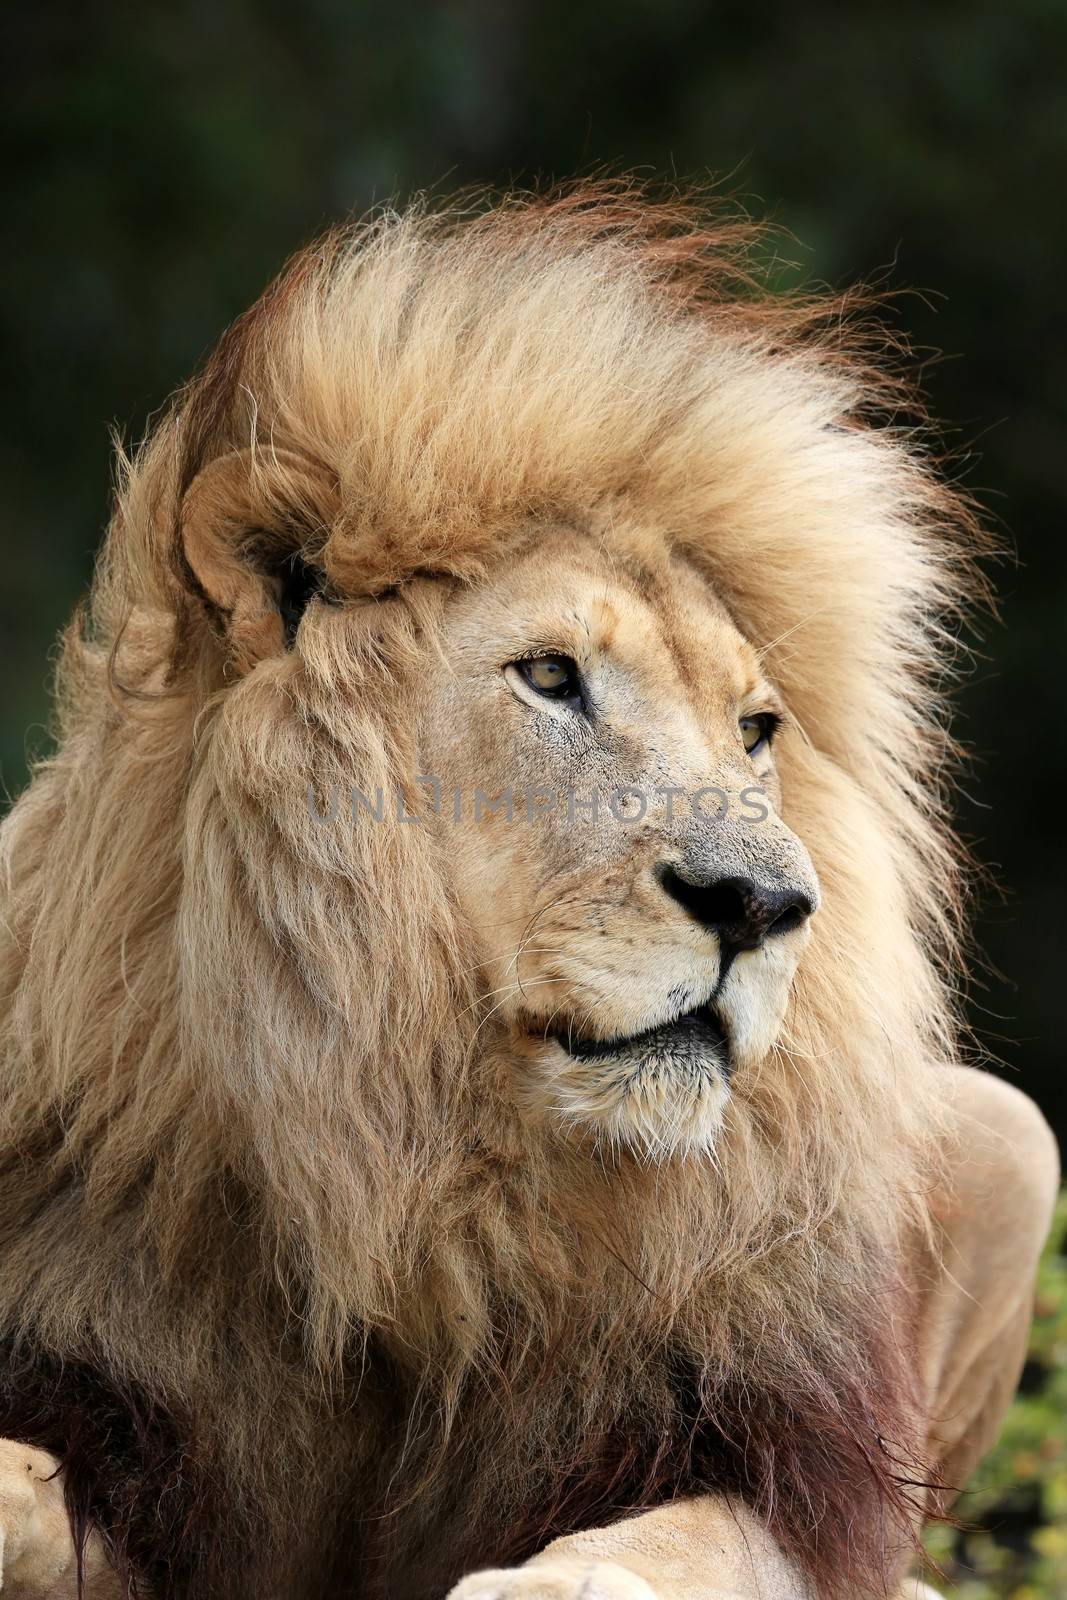 Huge handsome male lion with big shaggy mane